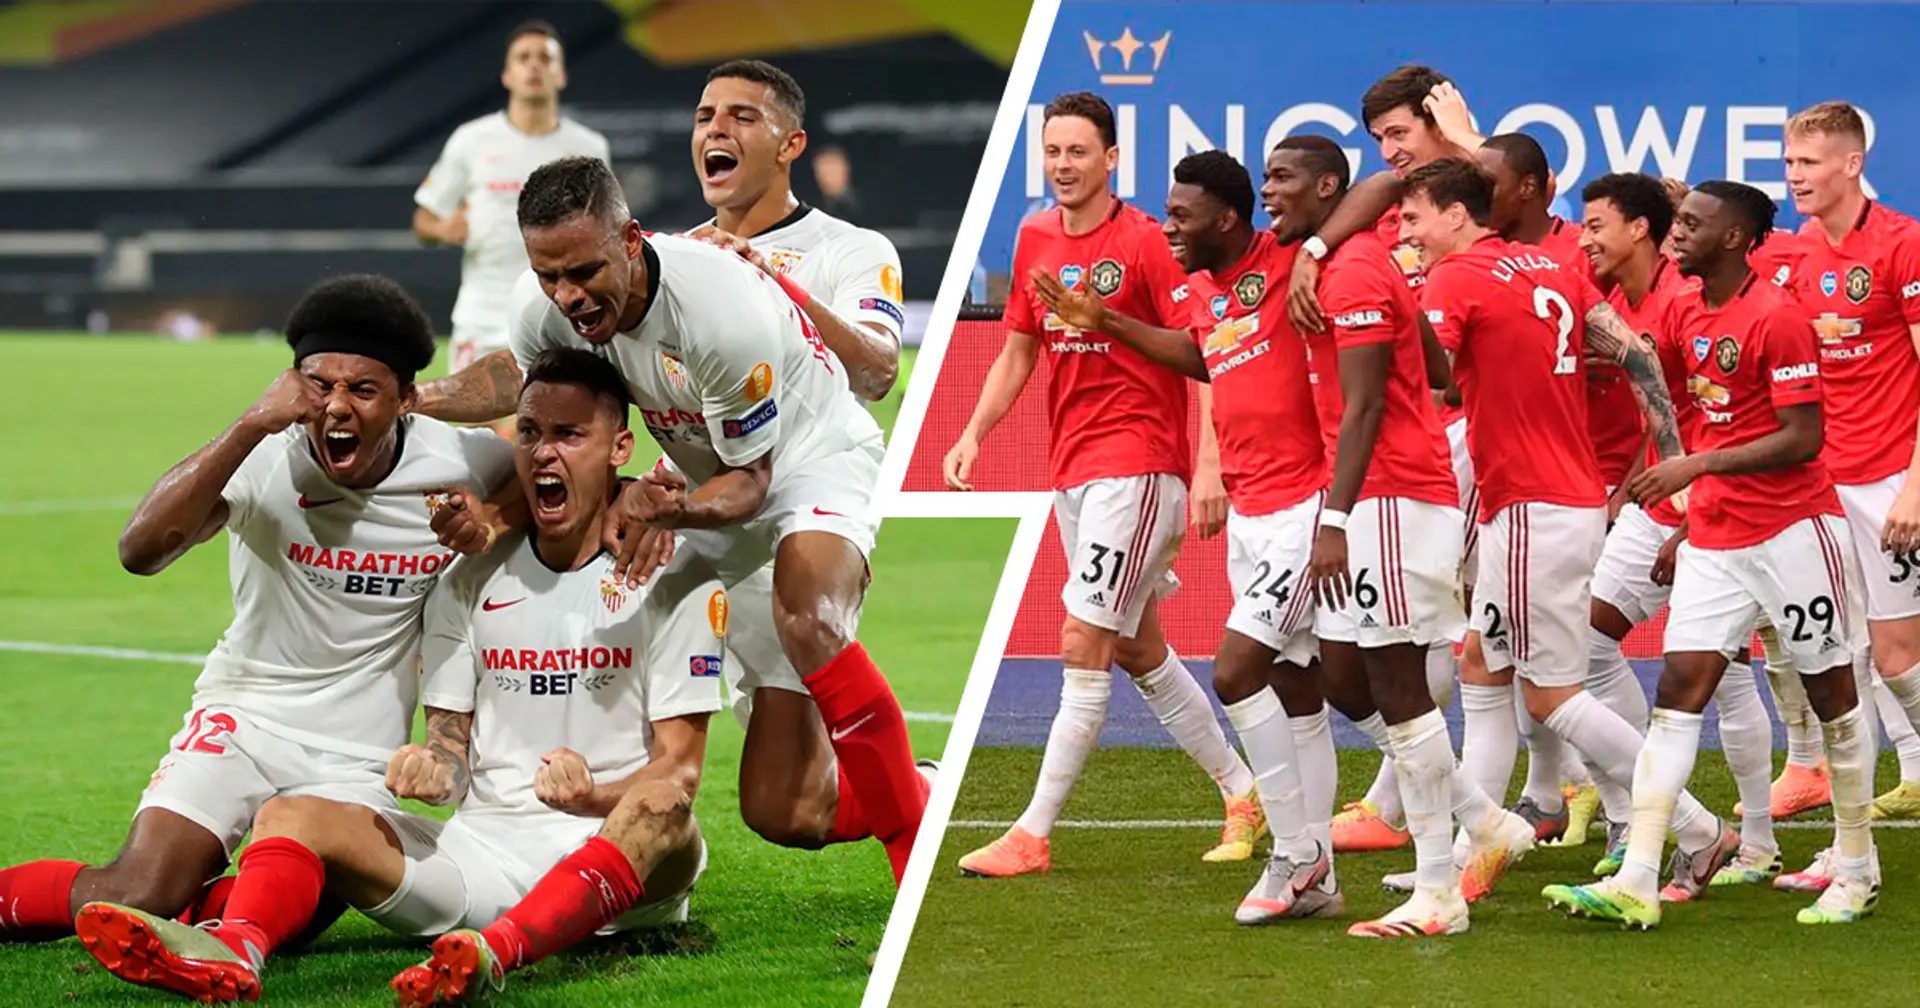 Sevilla vs Man United: Team news, probable line-ups, score predictions and more – preview